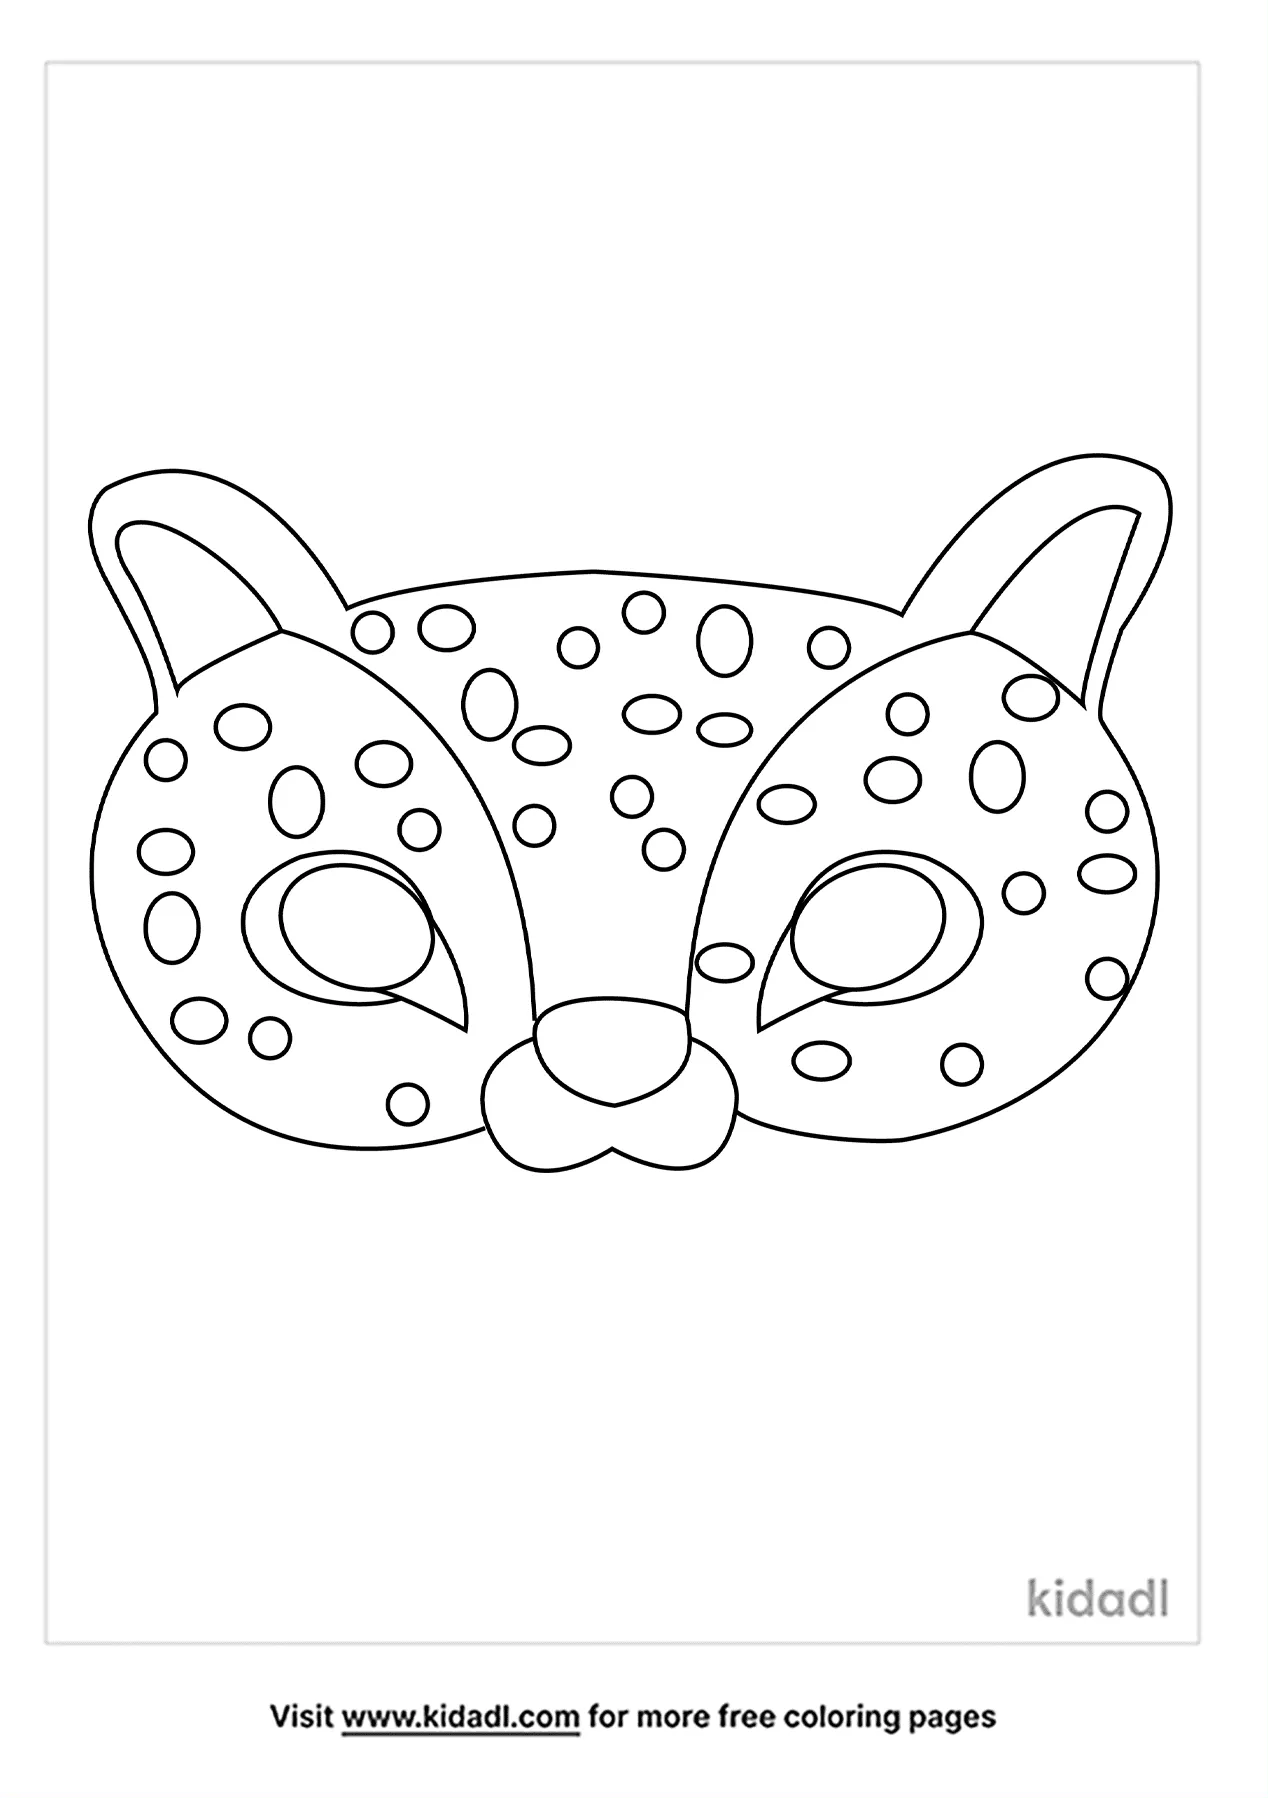 Free jaguar mask coloring page coloring page printables